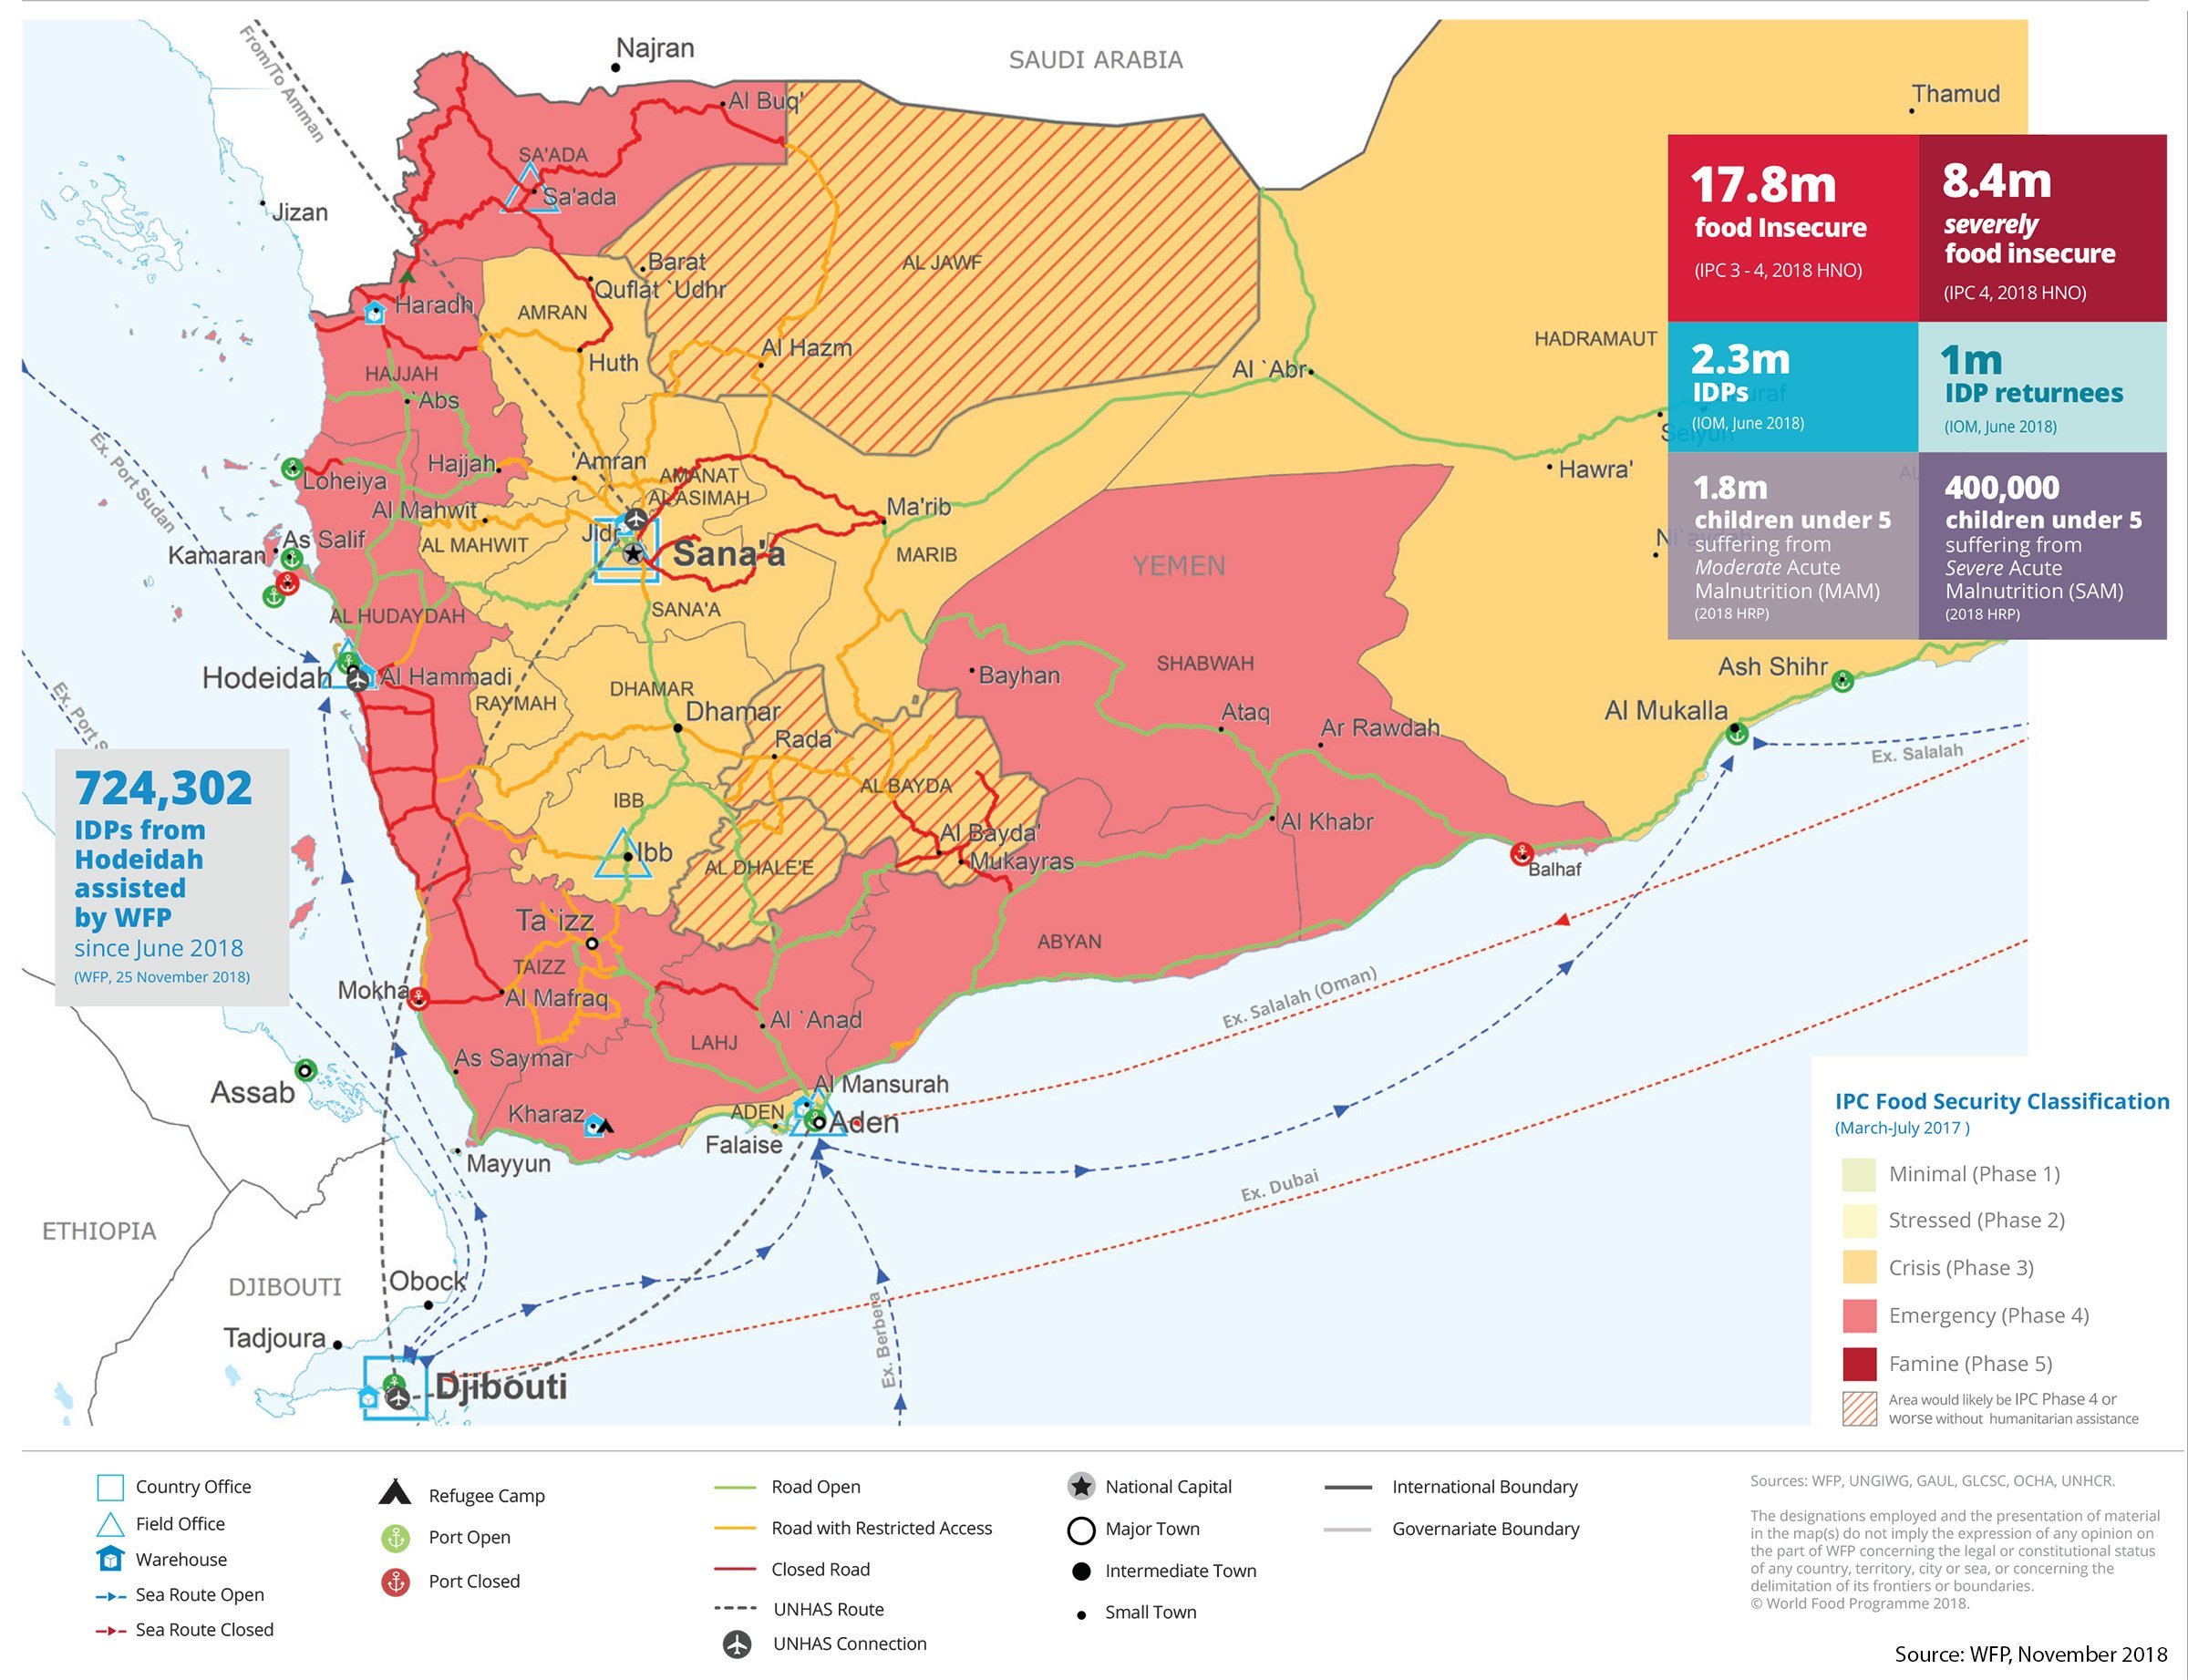 Food insecurity in Yemen.